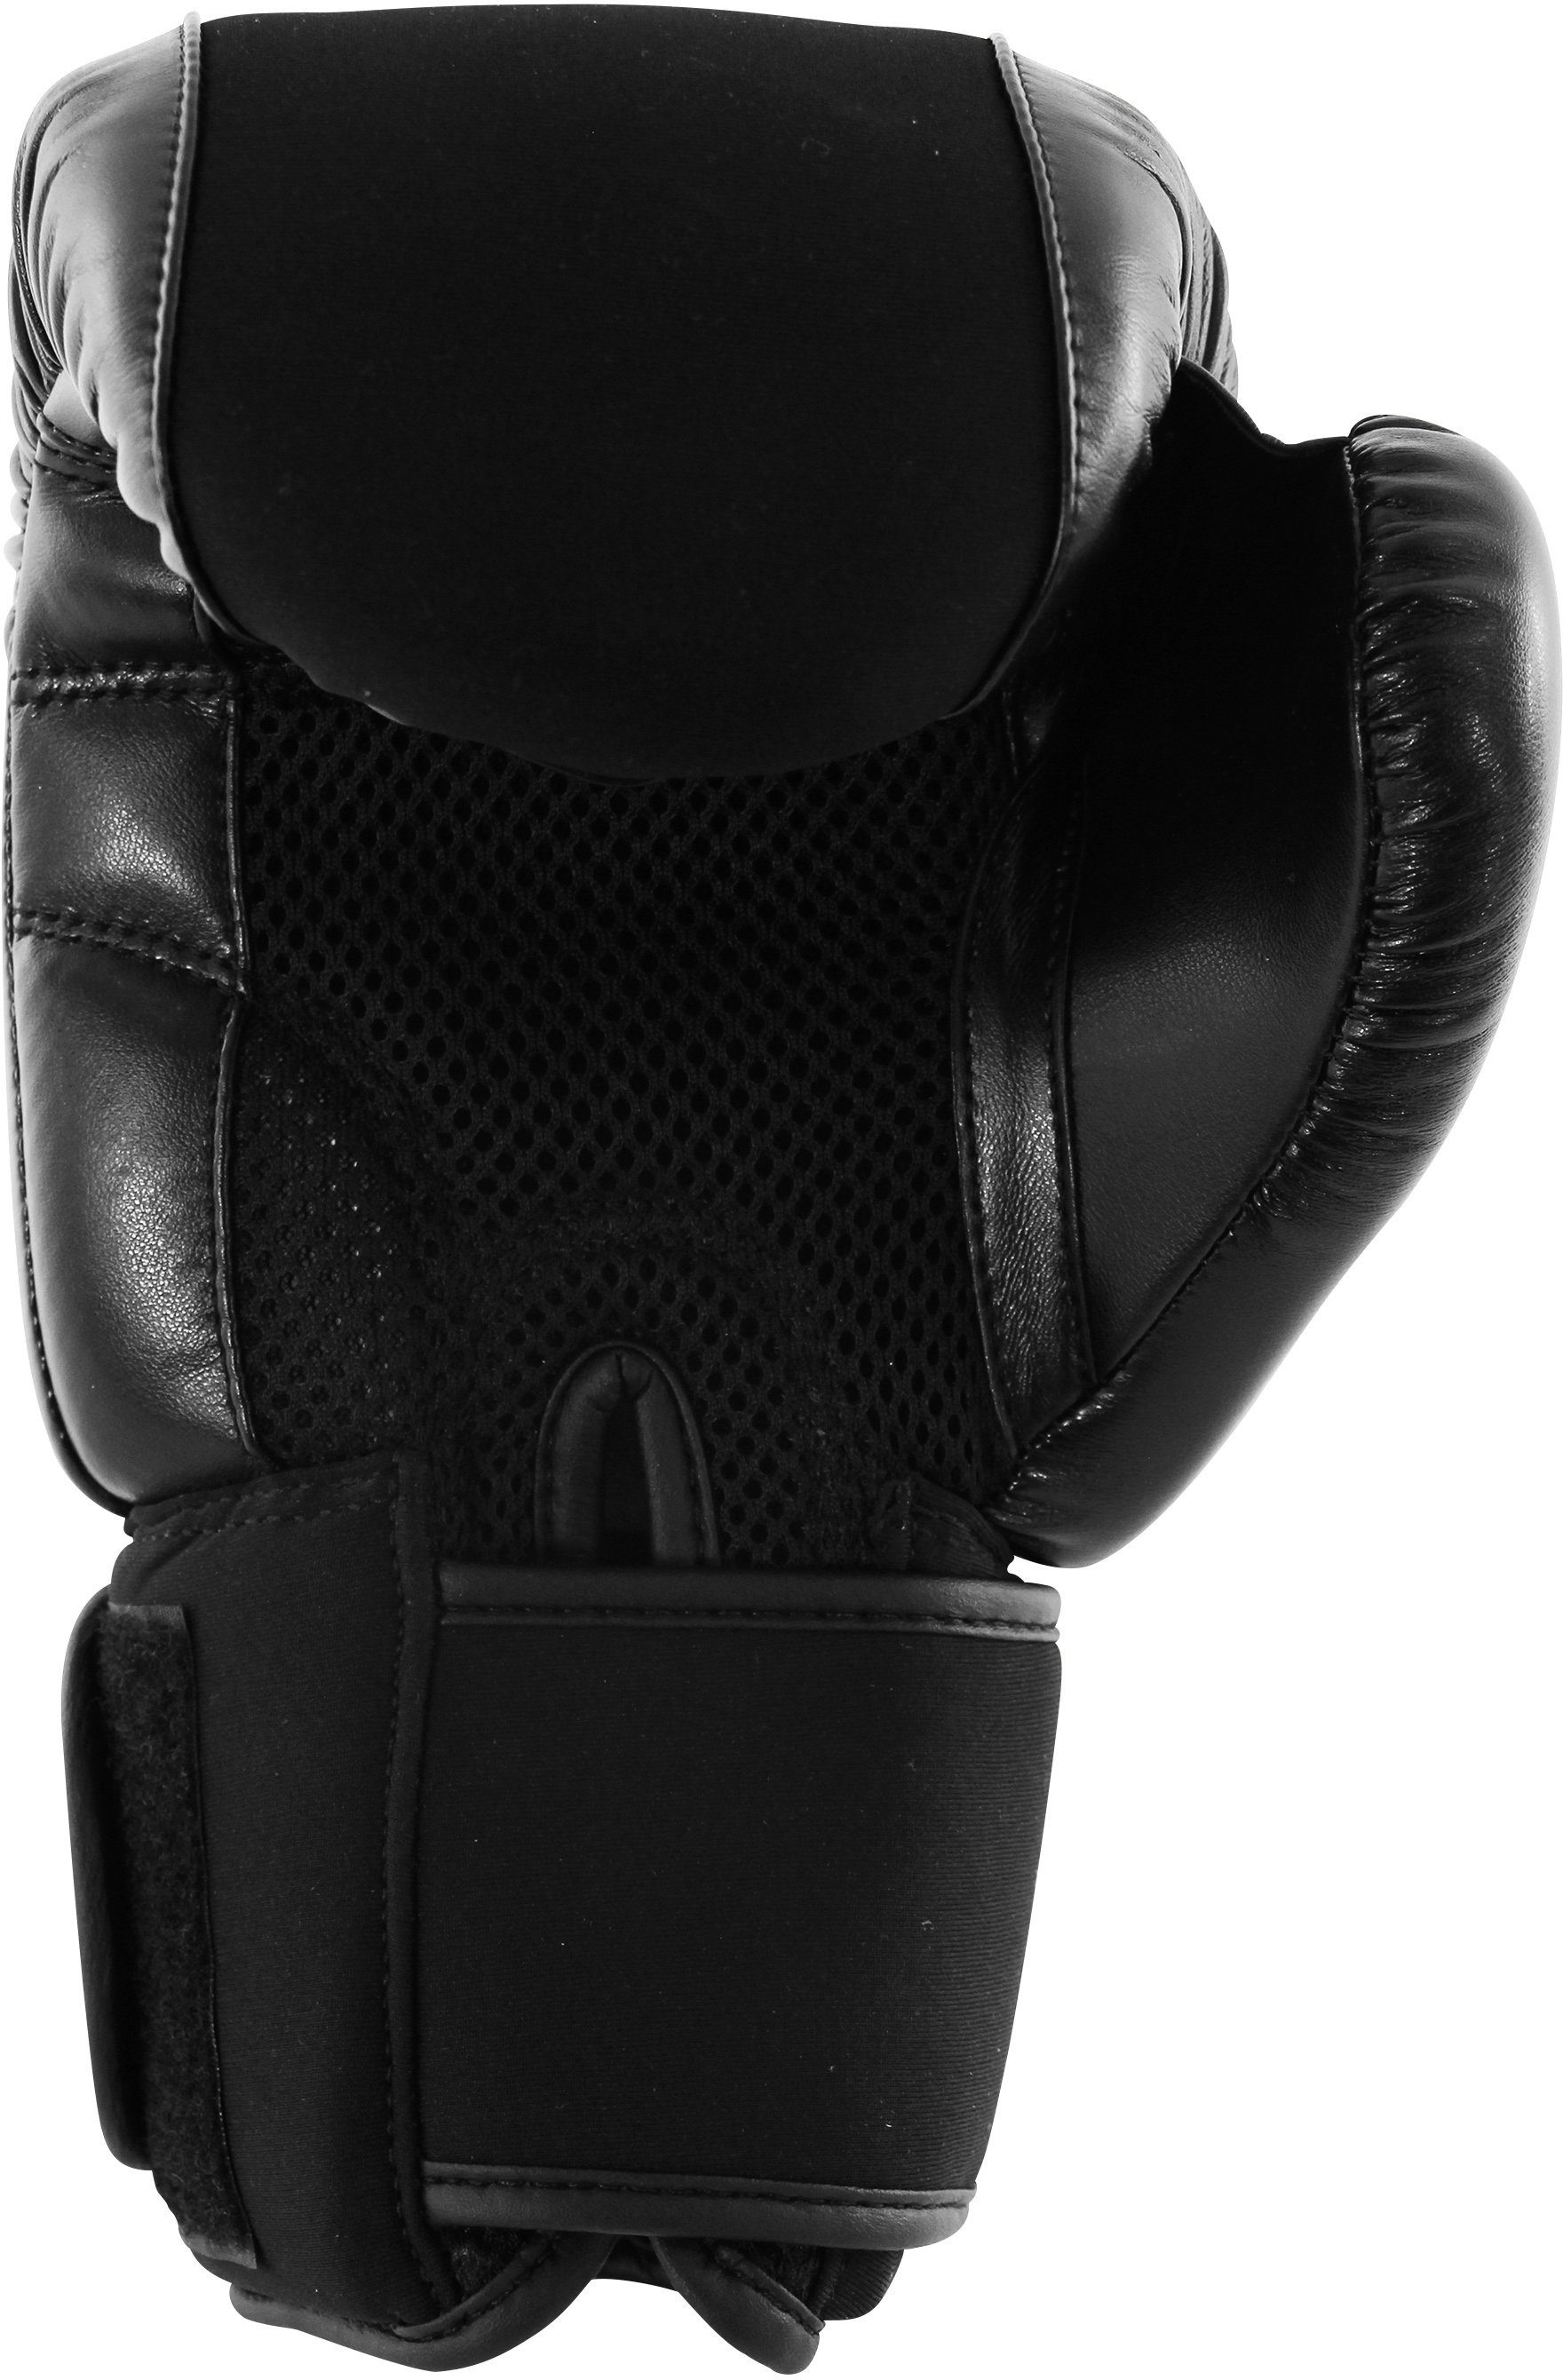 Gloves Washable S–M Boxing adidas Performance Boxhandschuhe